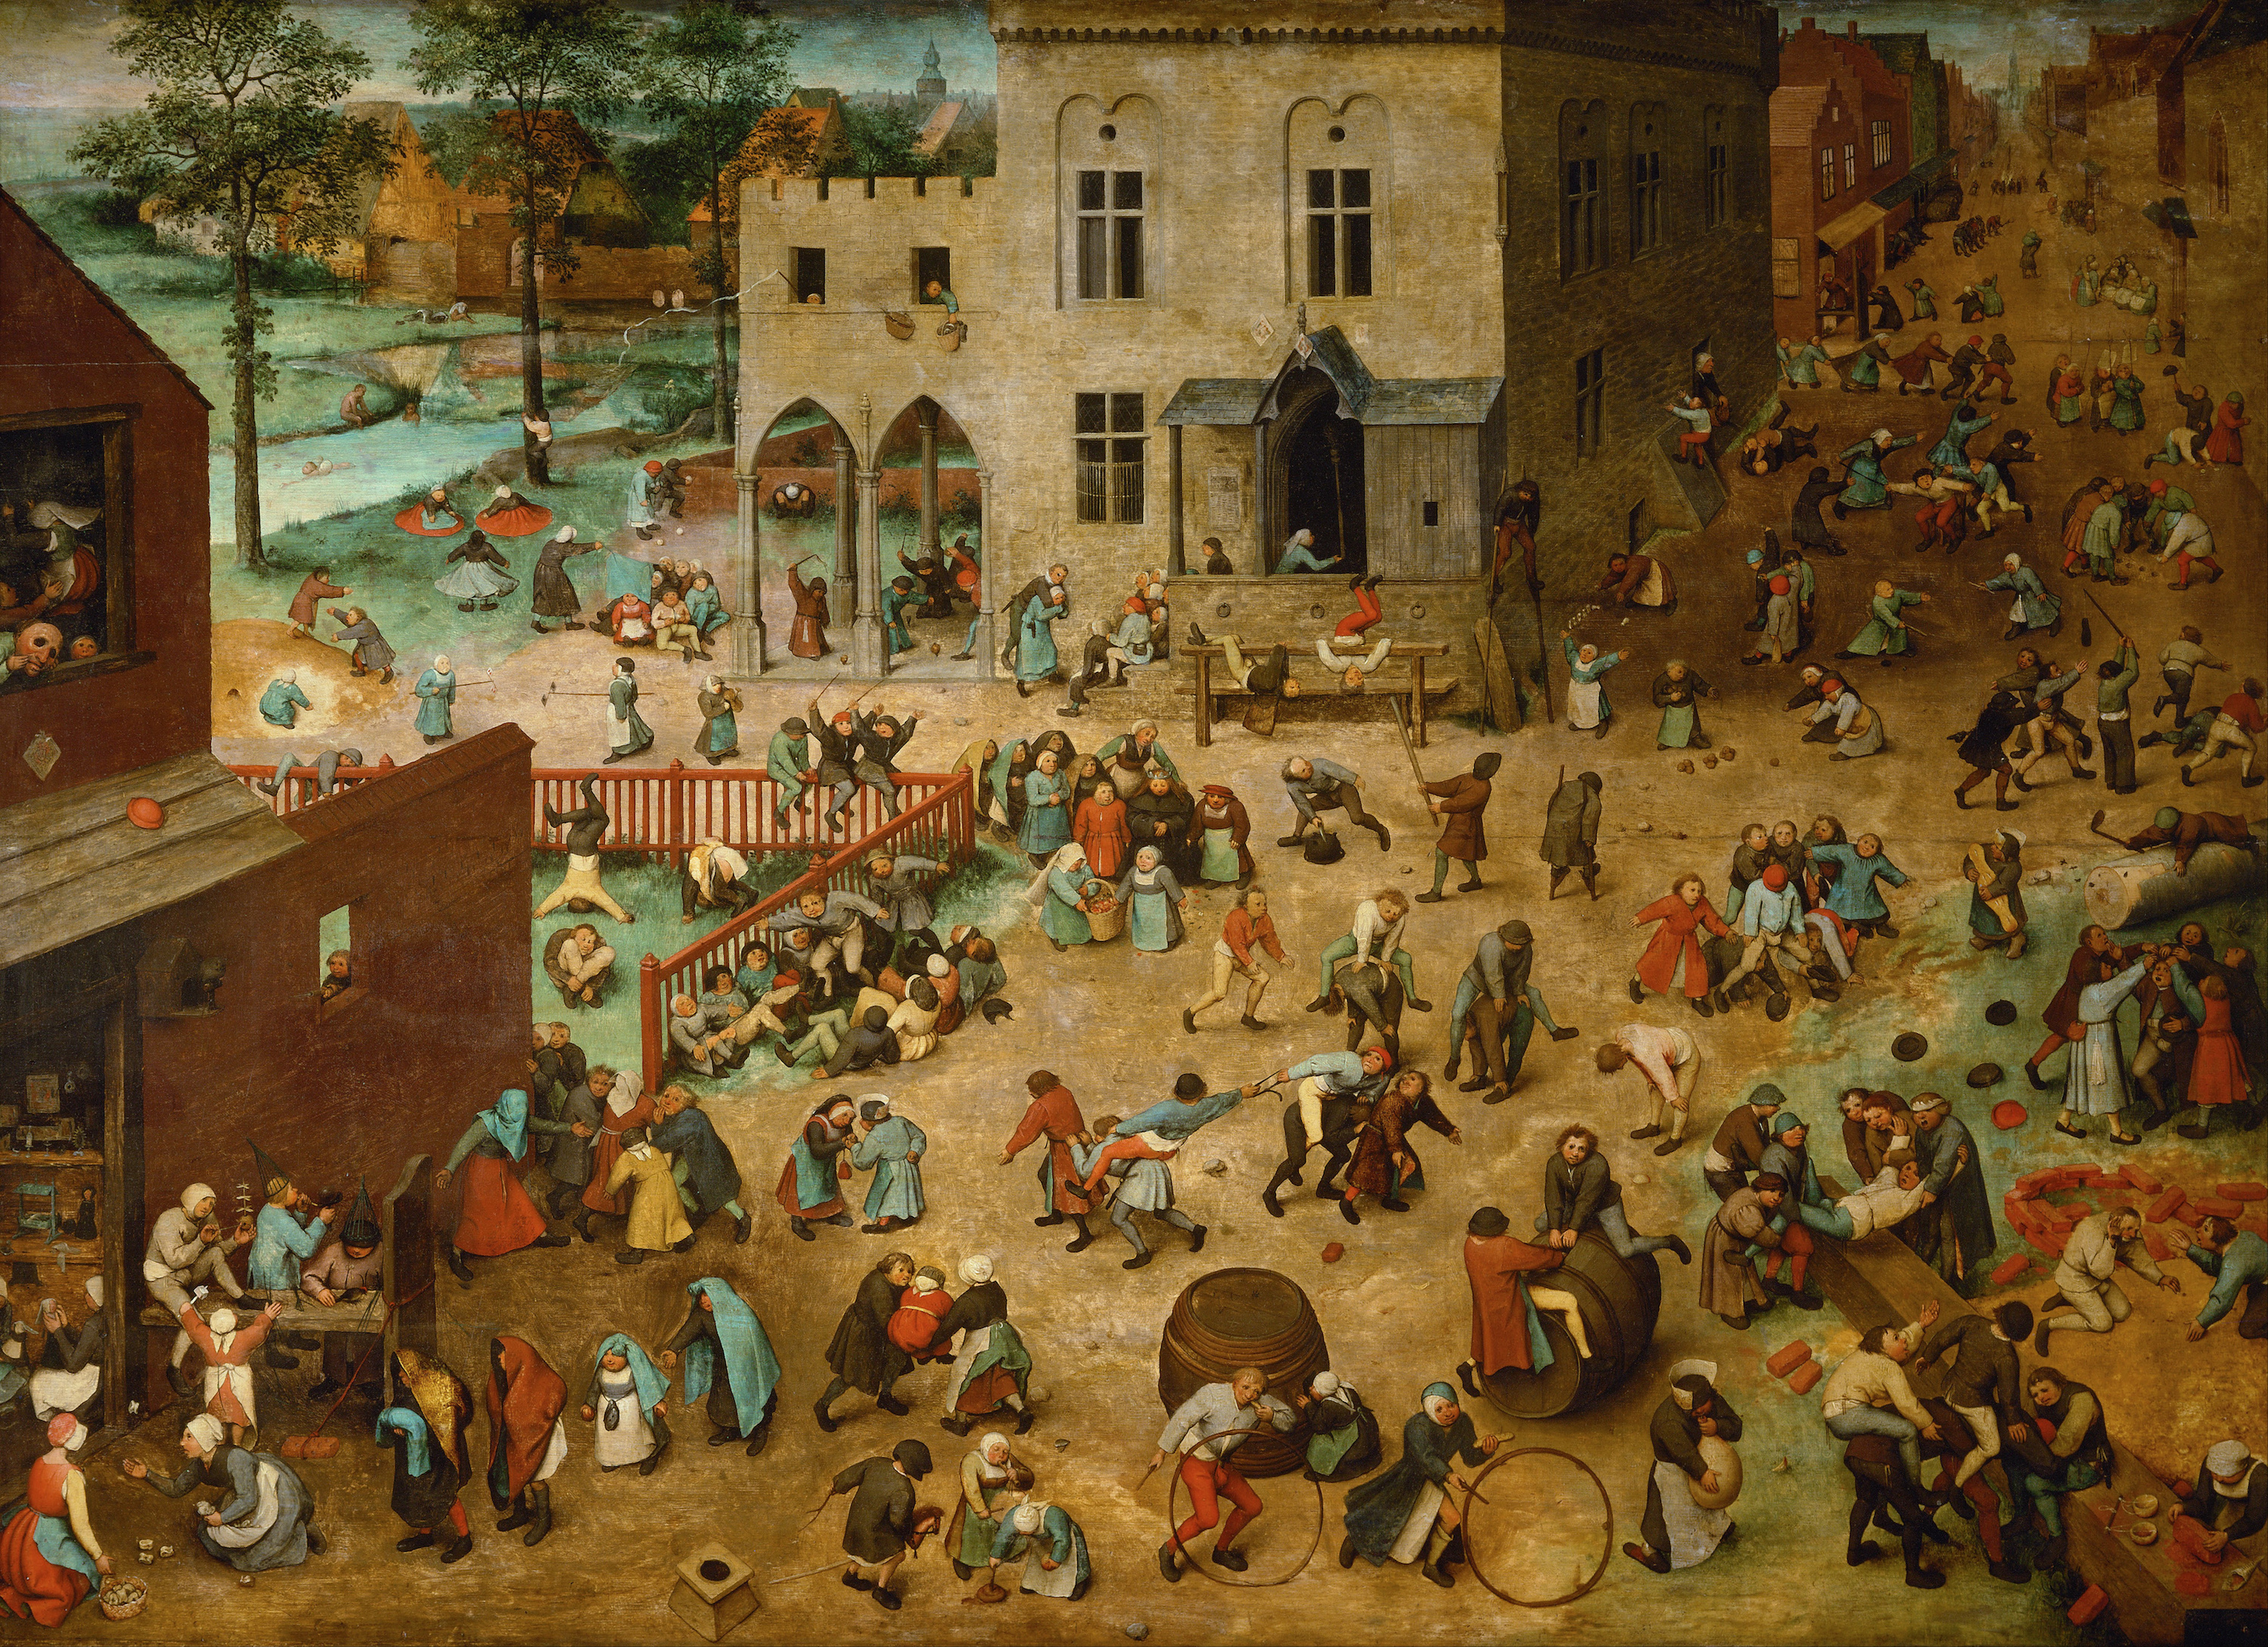 Children's Games by Pieter Bruegel the Elder - 1560 - 118 x 161 cm Kunsthistorisches Museum